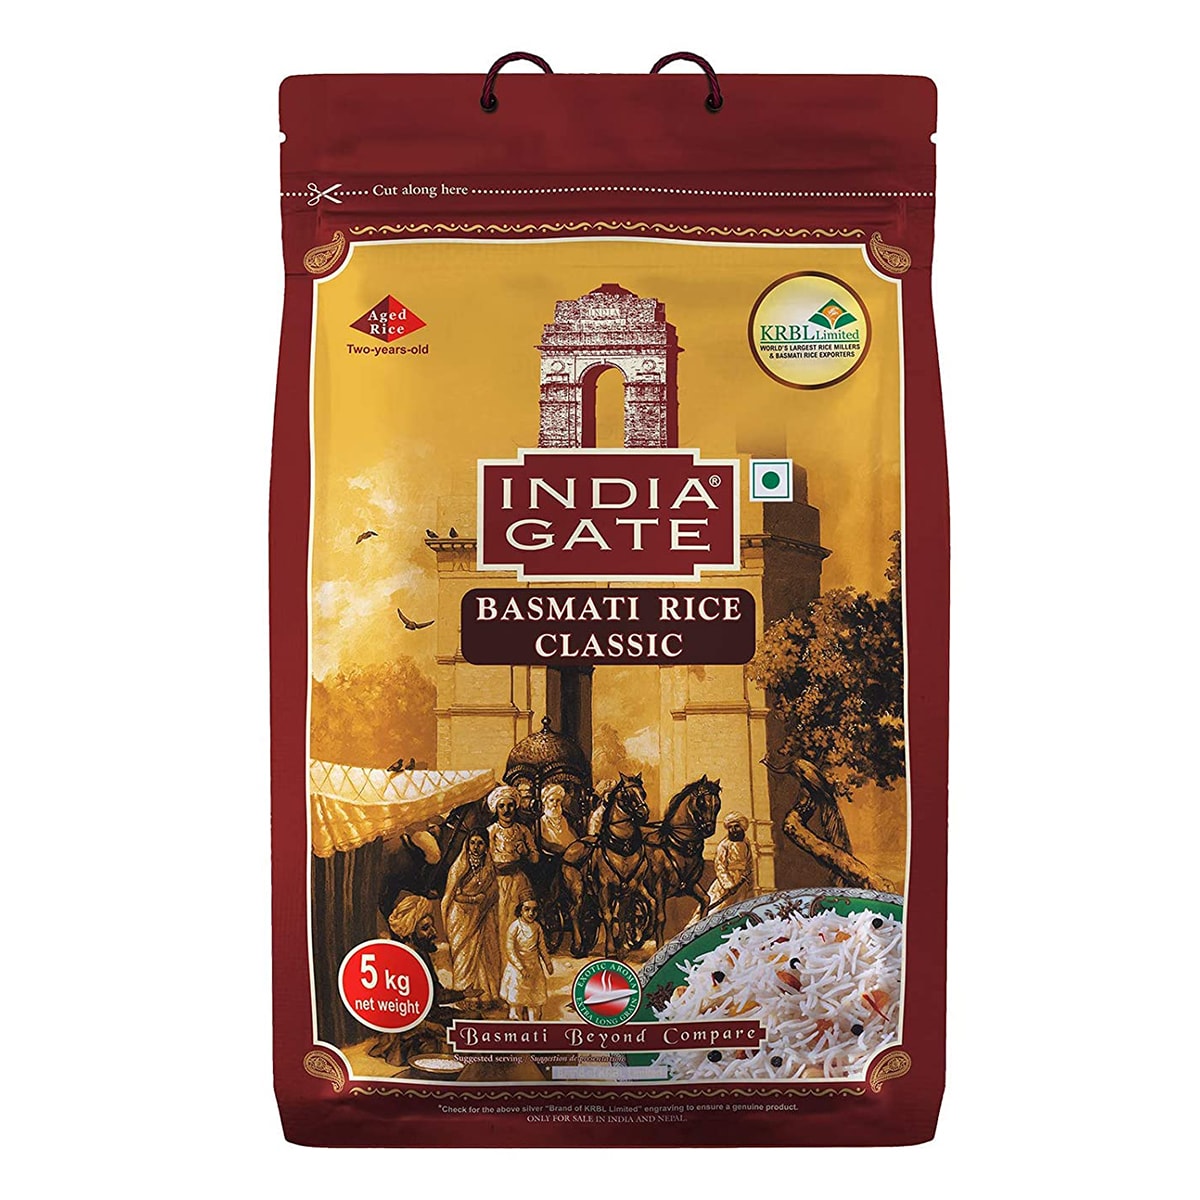 Buy India Gate Basmati Rice Classic - 5 kg